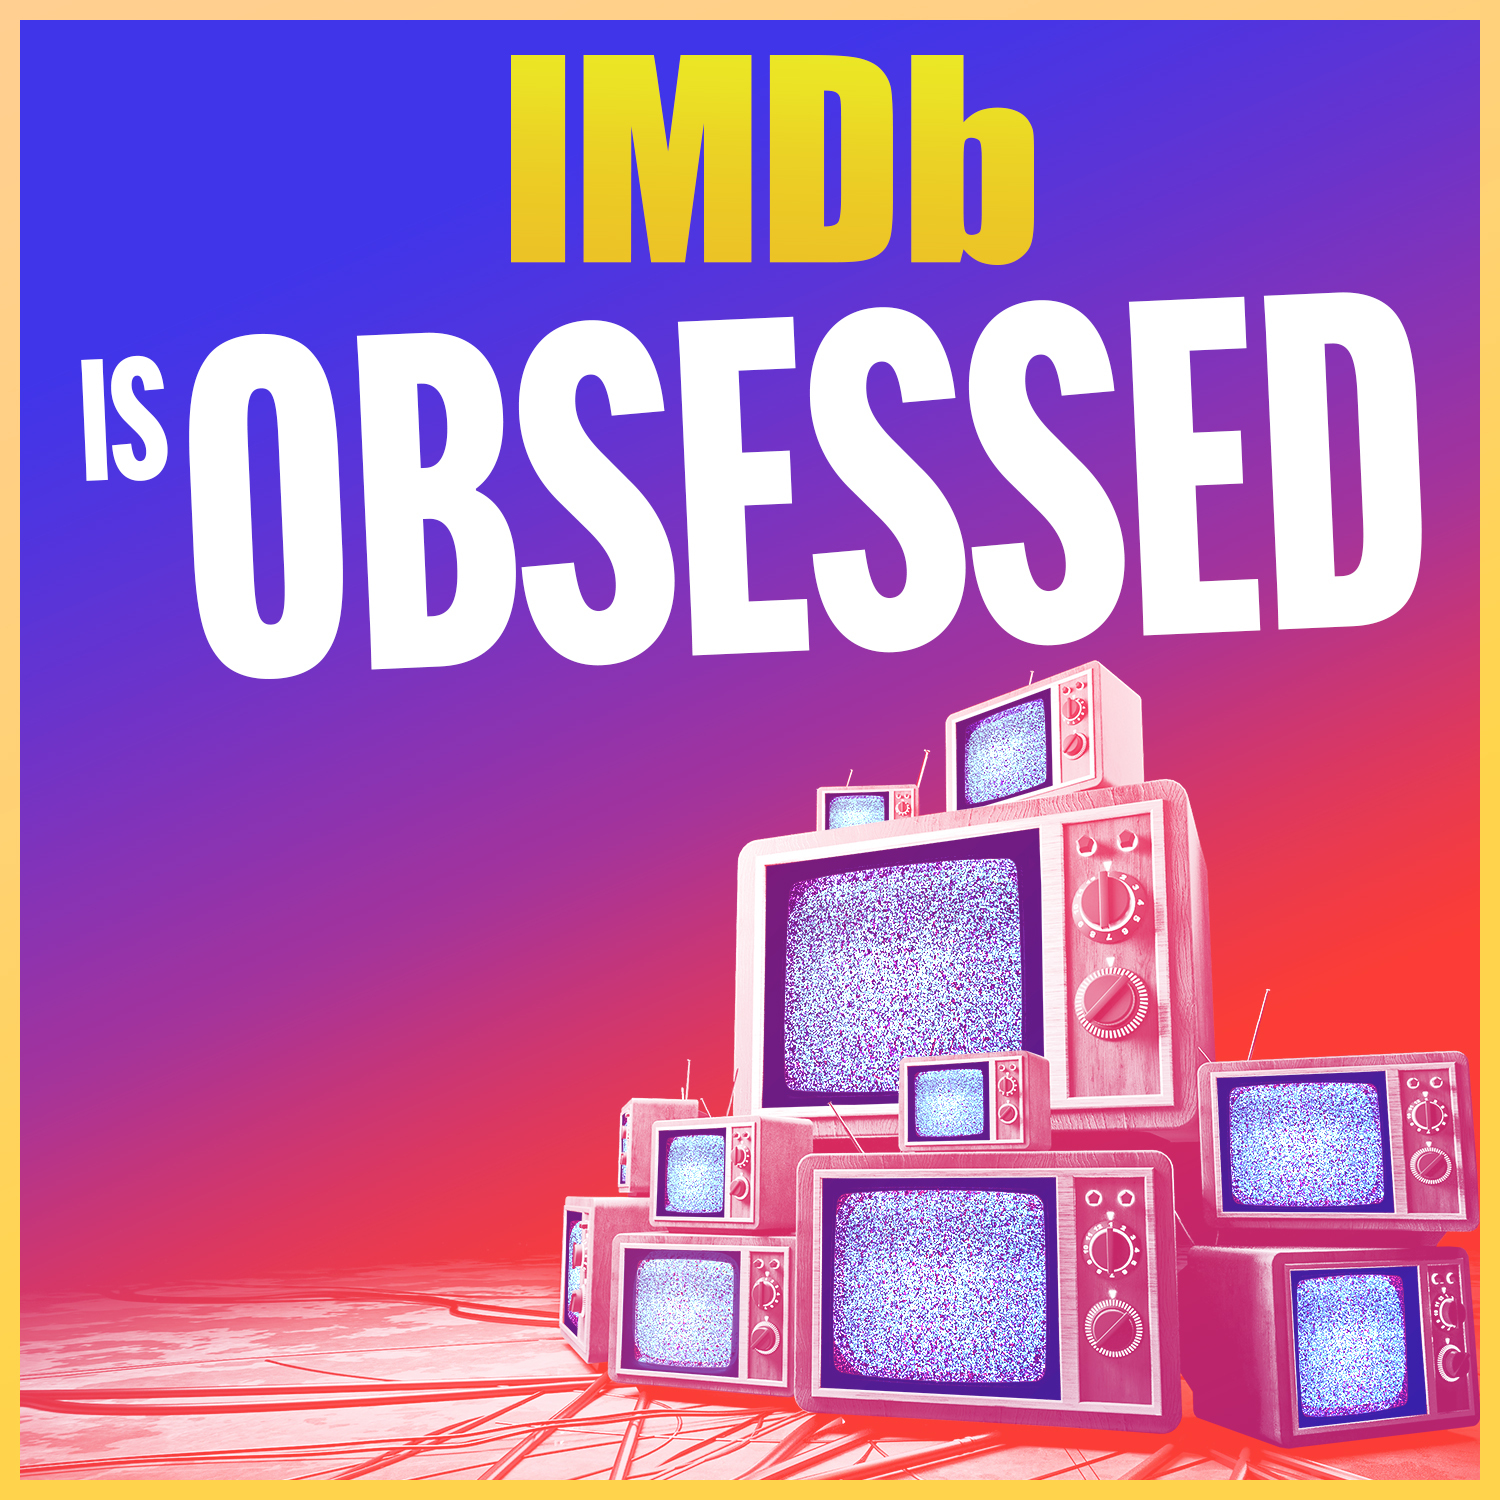 Obsession (TV Series) - IMDb